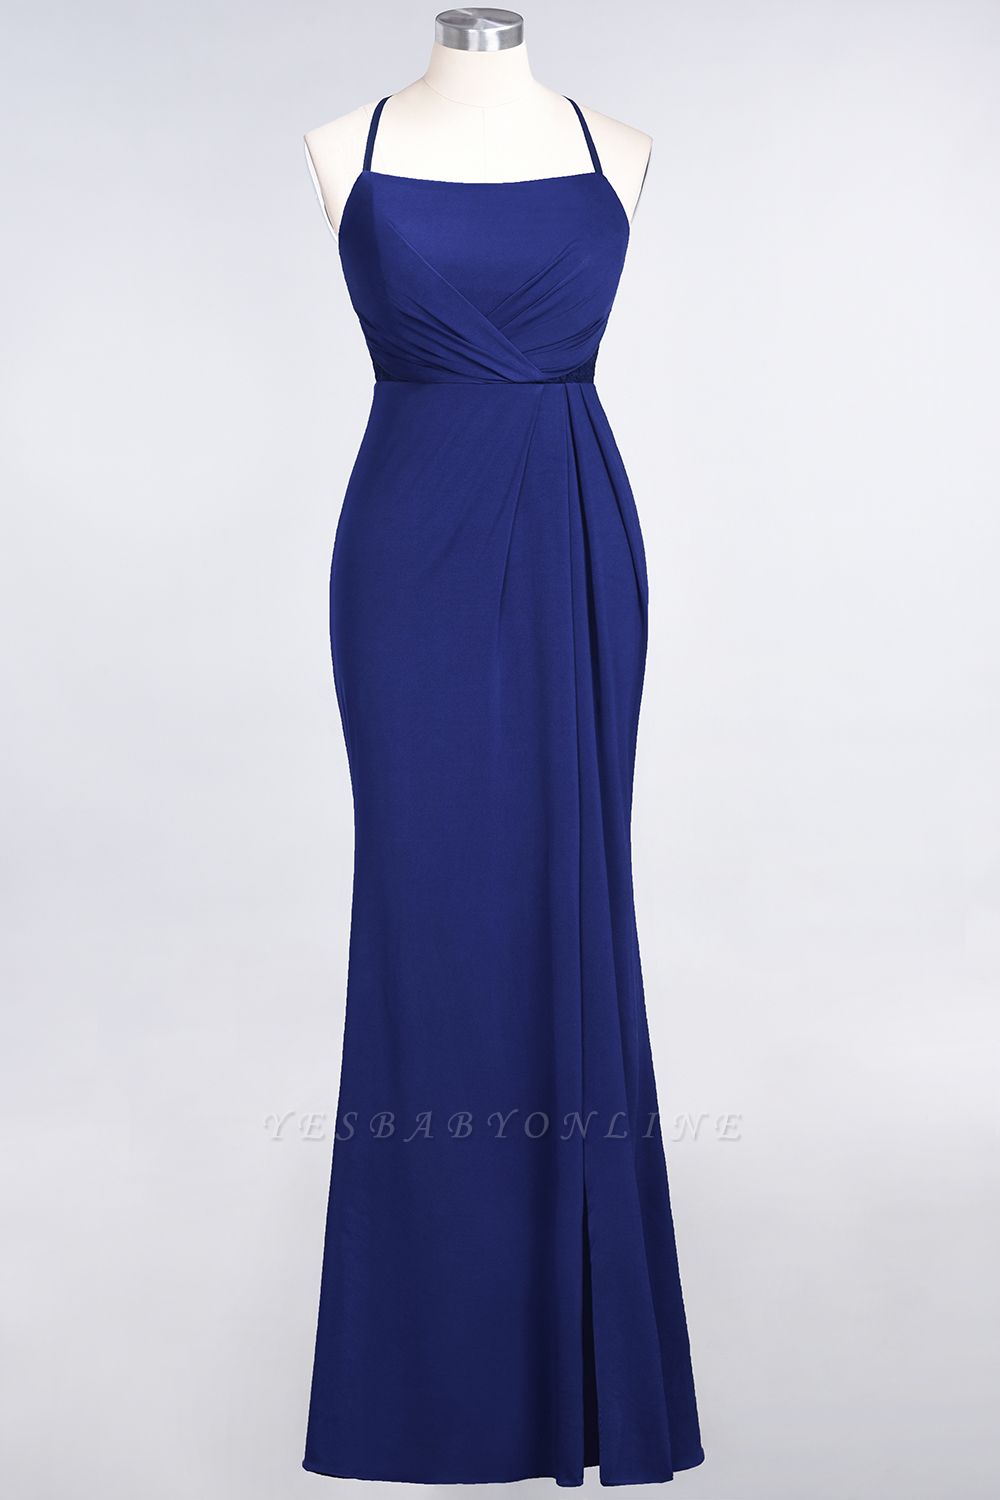 Blue Prom Dresses In Navy, Royal, & Light Blue | Windsor